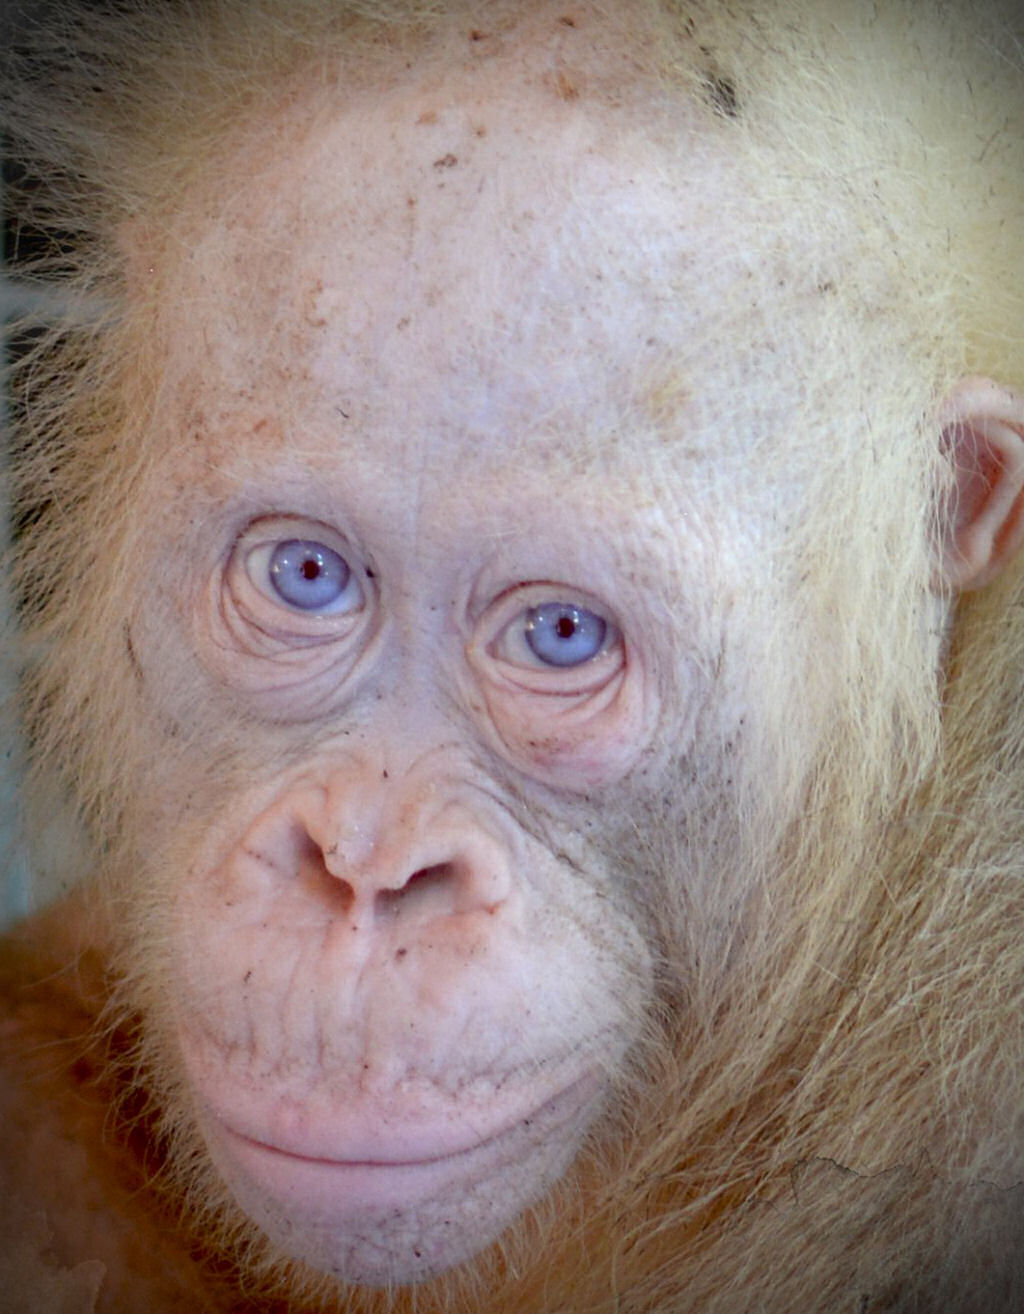 Deslumbrante orangotango albino de olhos azuis  resgatado dos captores